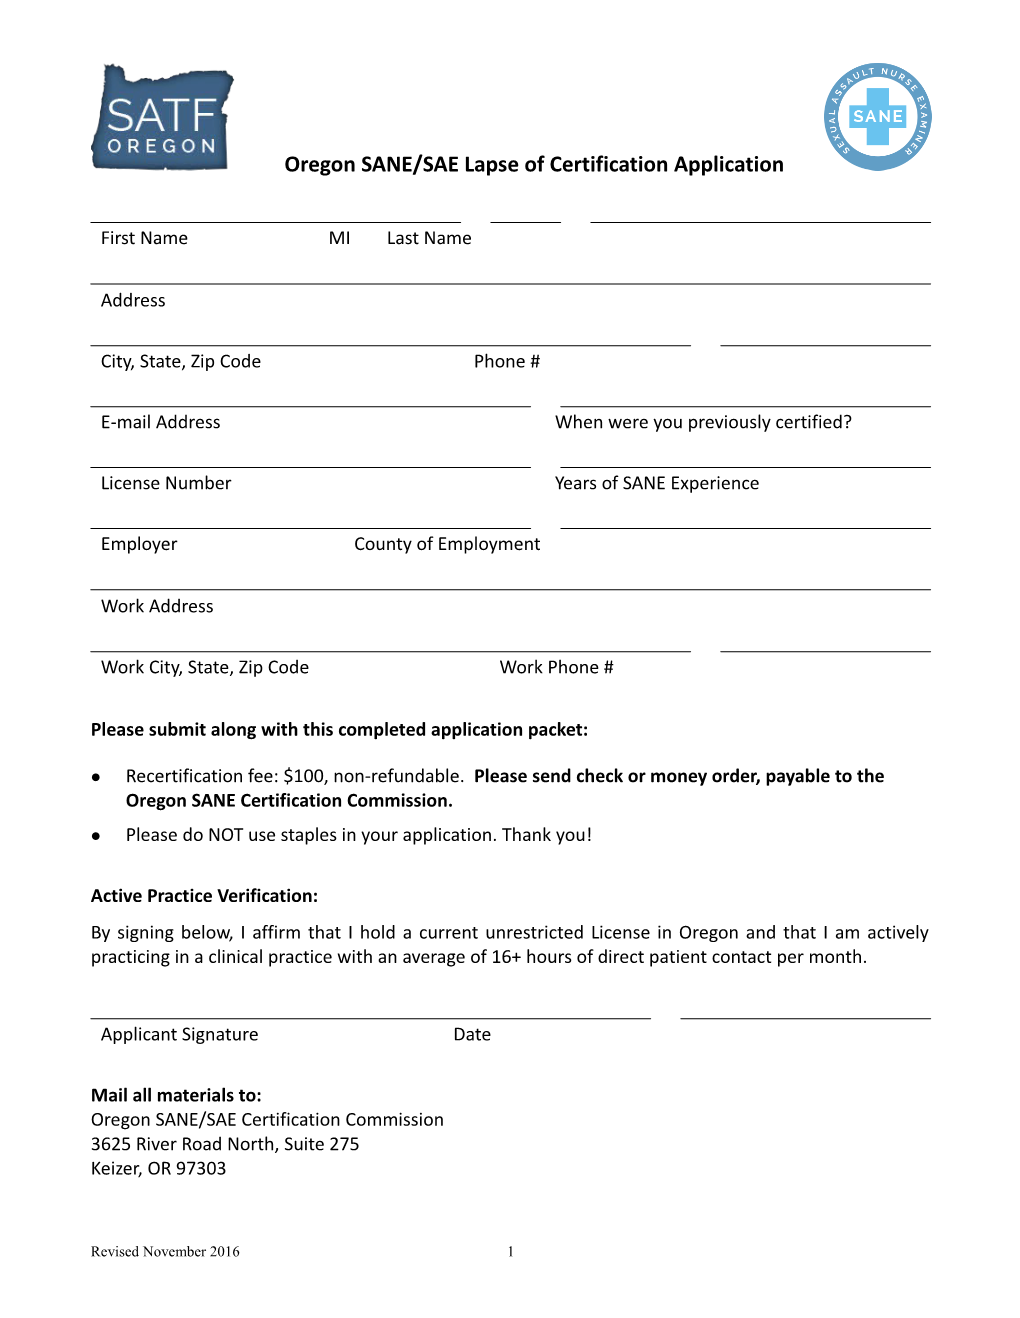 Oregon SANE/SAE Certification Application